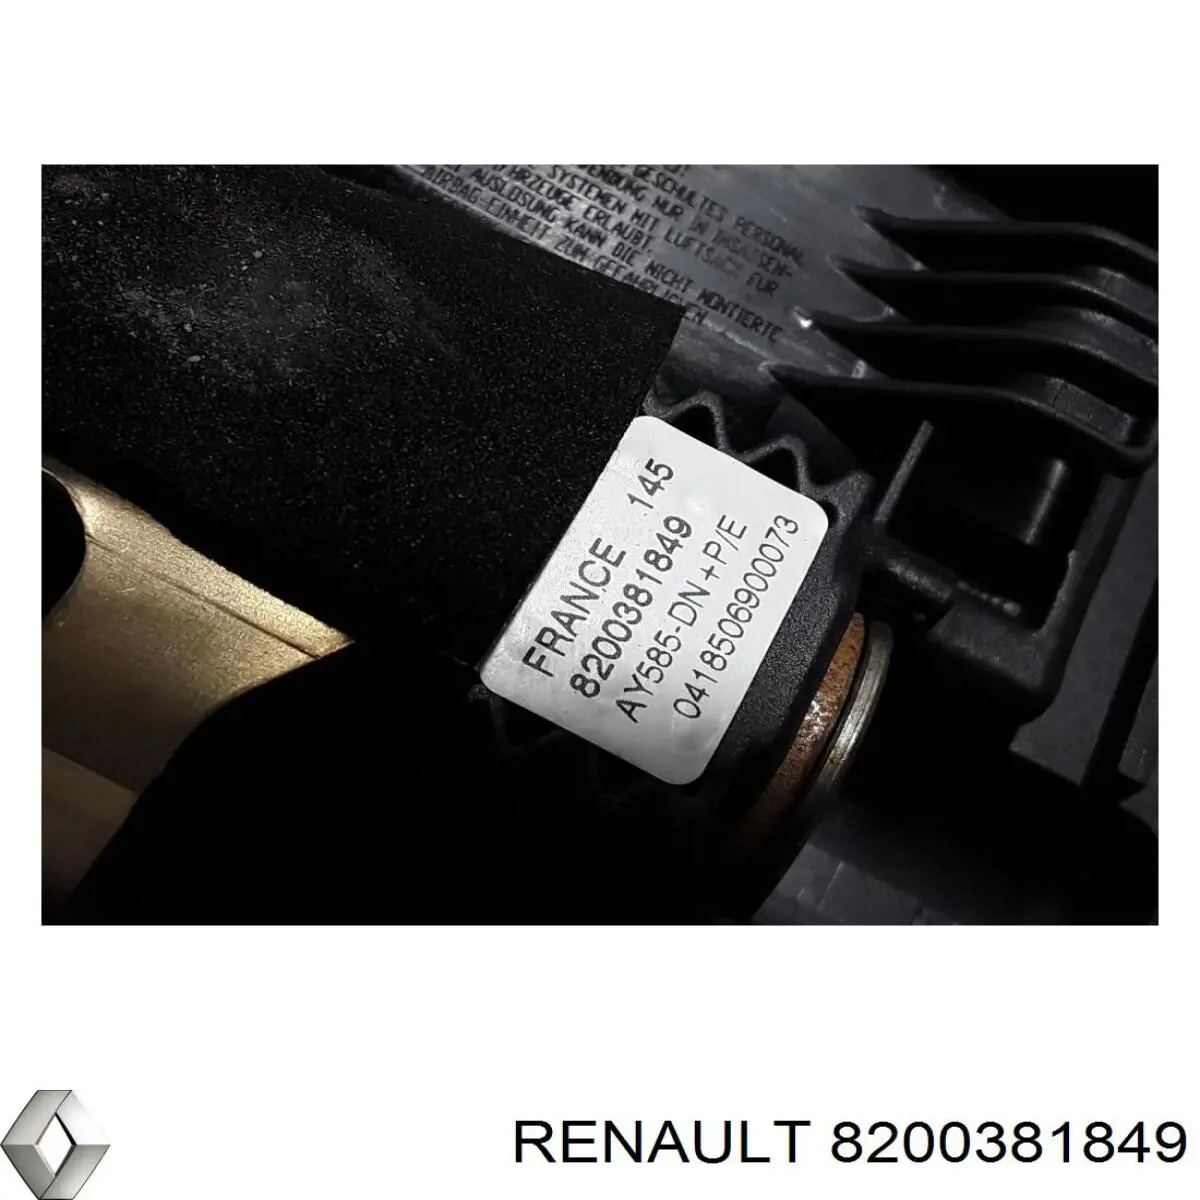 8200381849 Renault (RVI) airbag del conductor